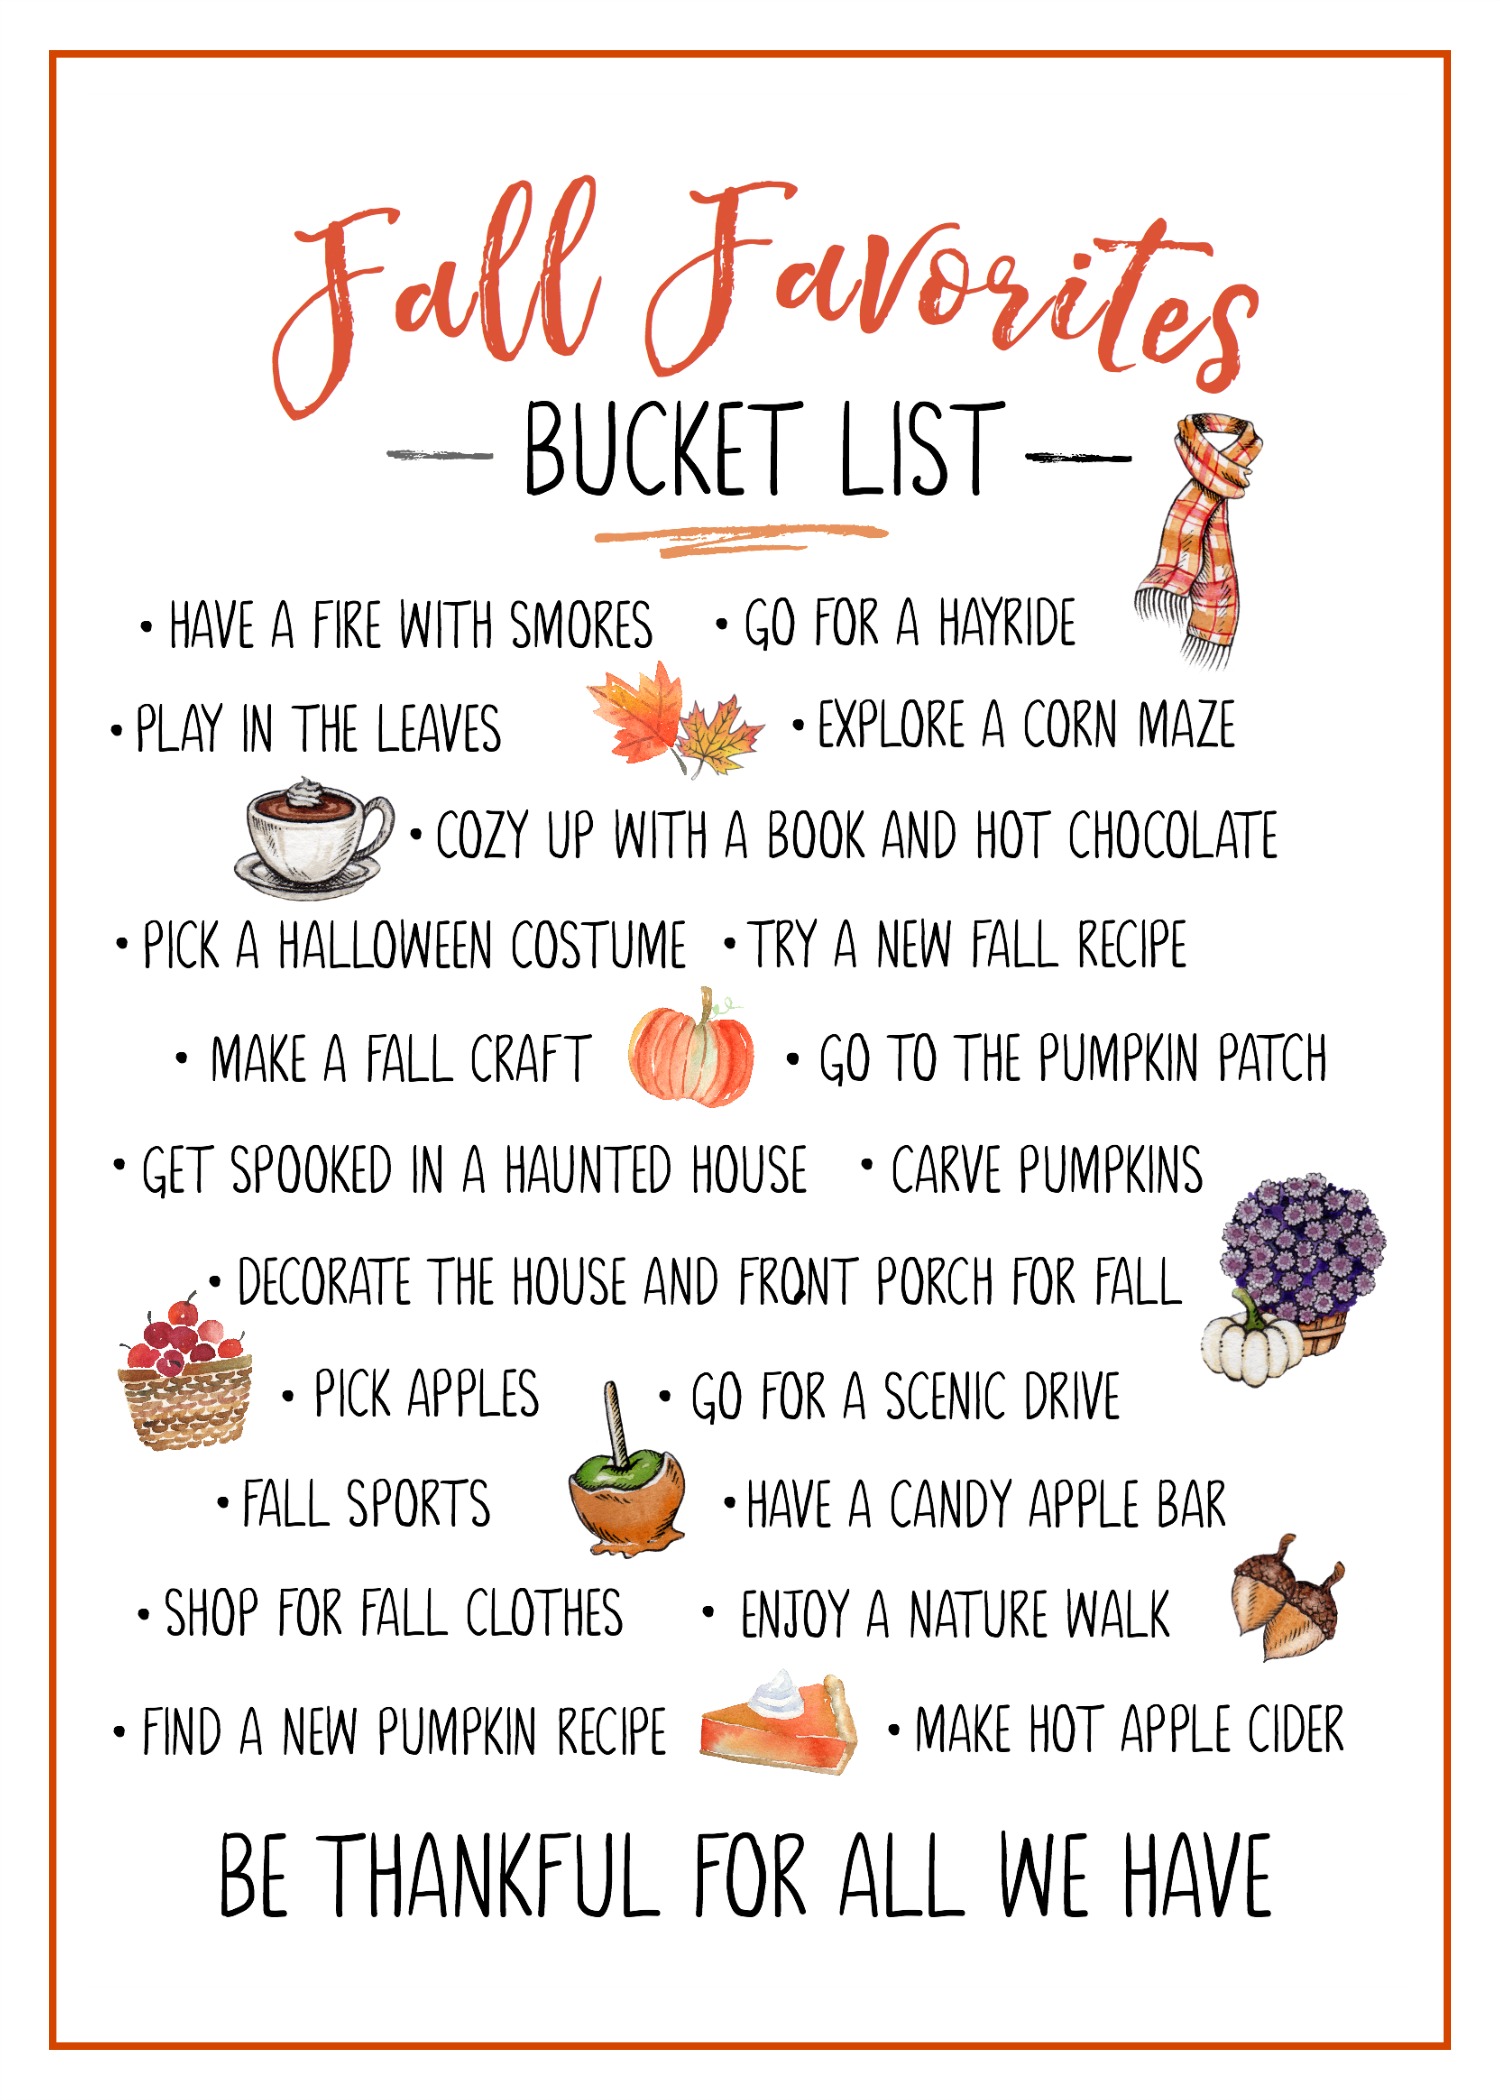 FREE Kids Halloween Fun Bucket List Activities Printable